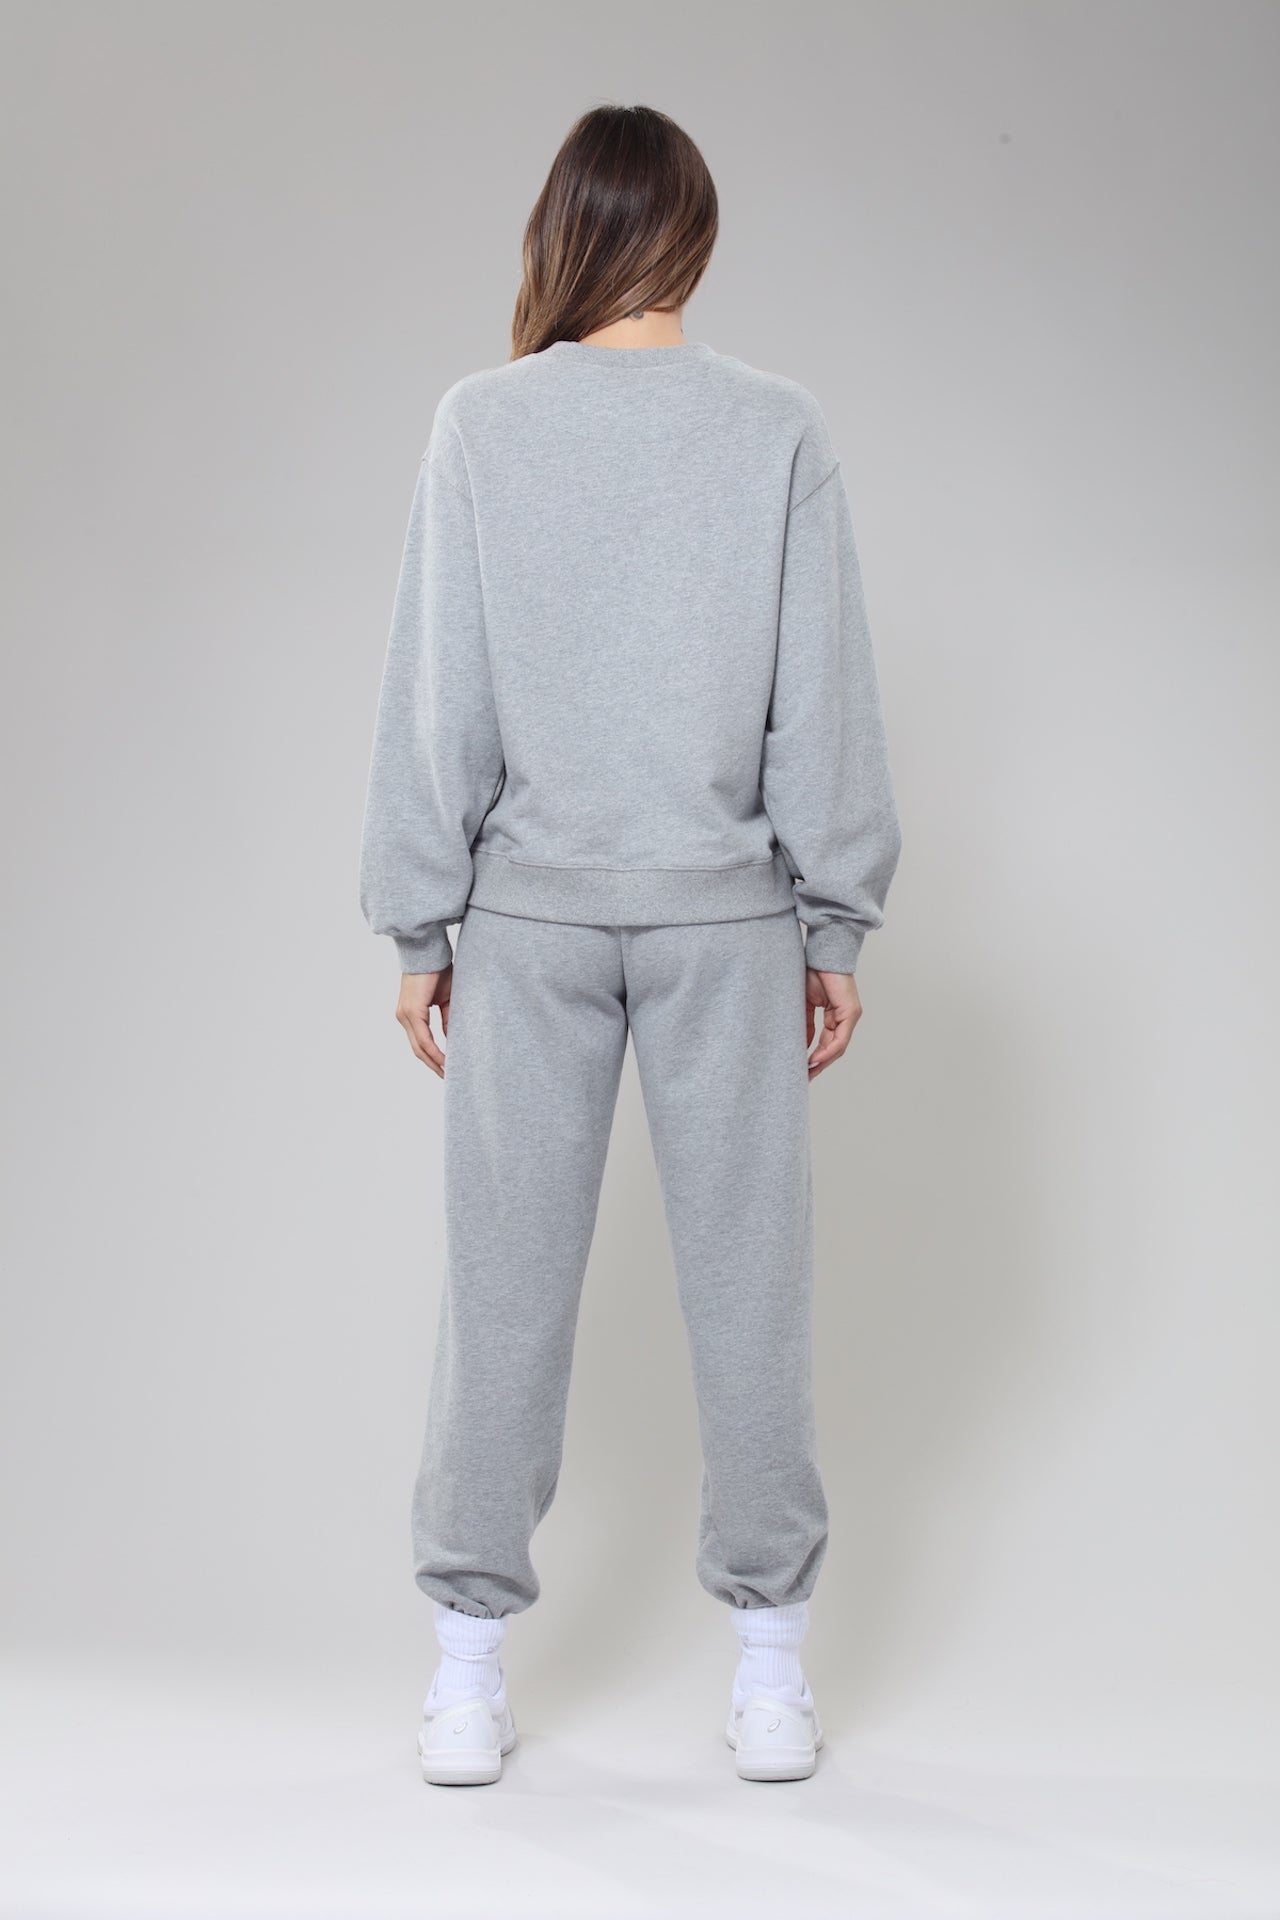 heather grey sweatpants set